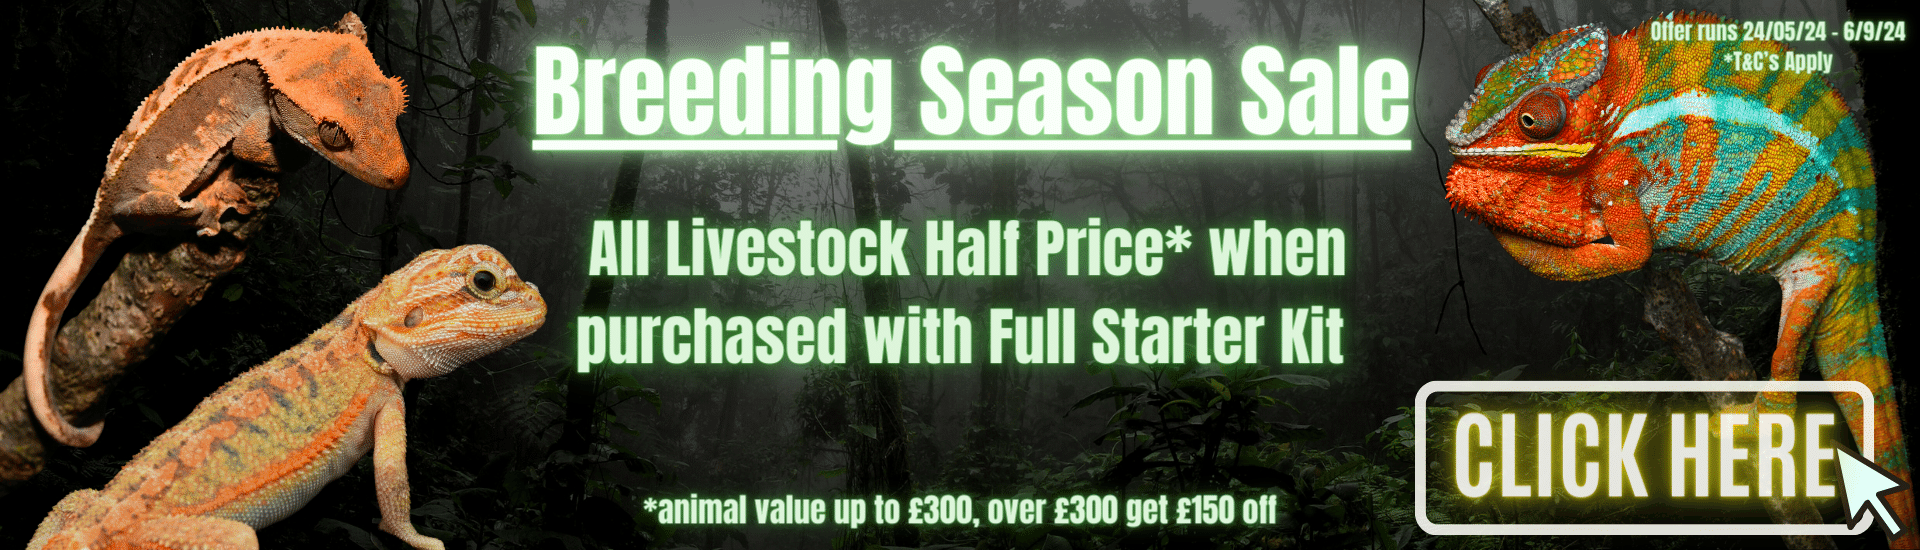 Breeding season sale